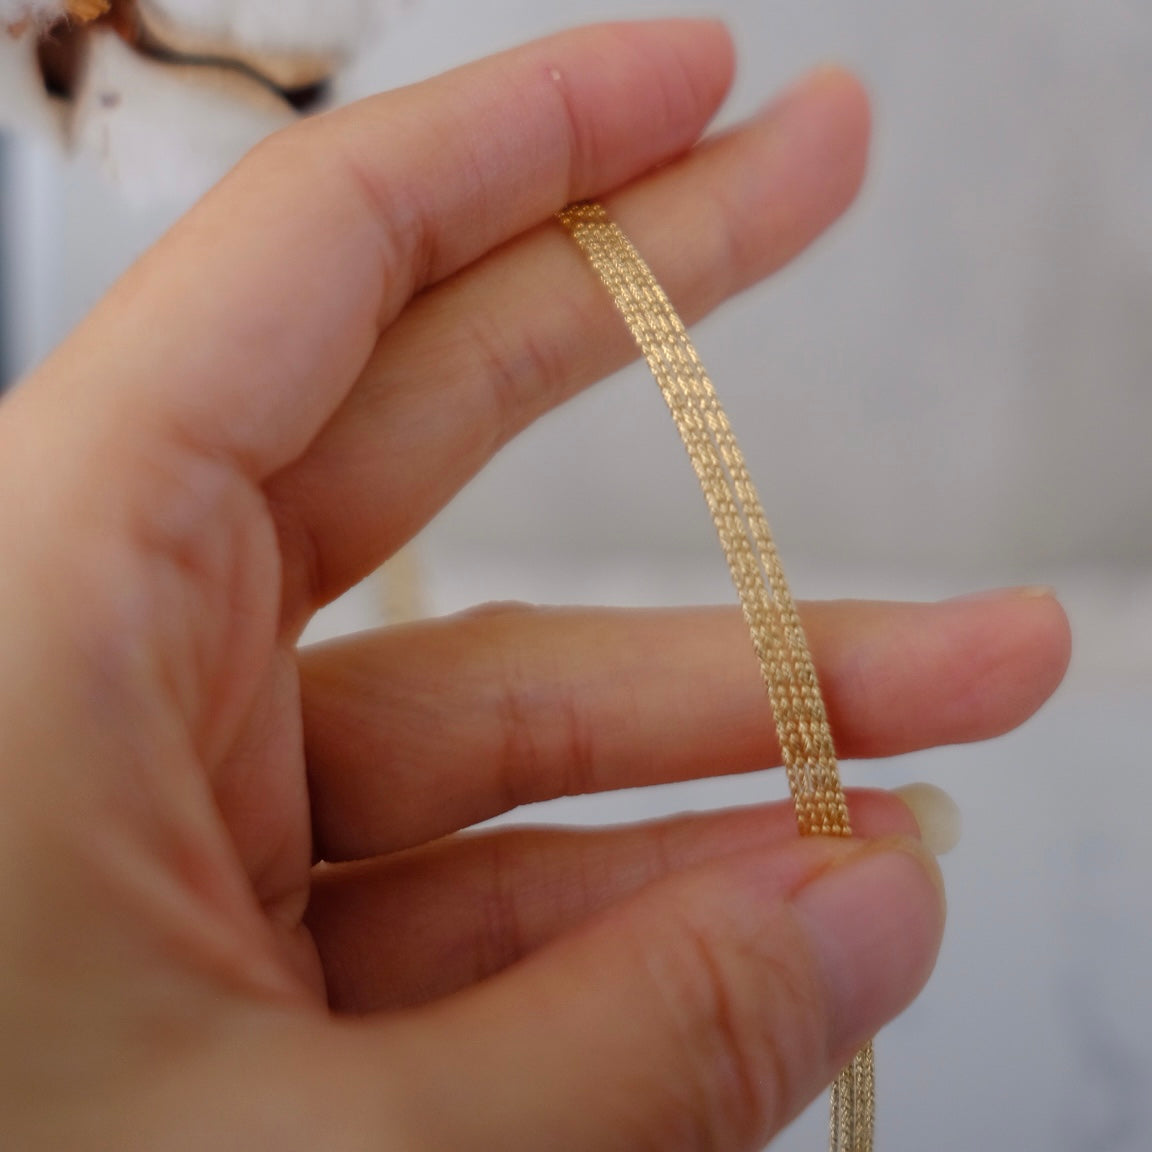 AU750, Japan Made 18k Collar Chain, 40+5cm, 1.51g